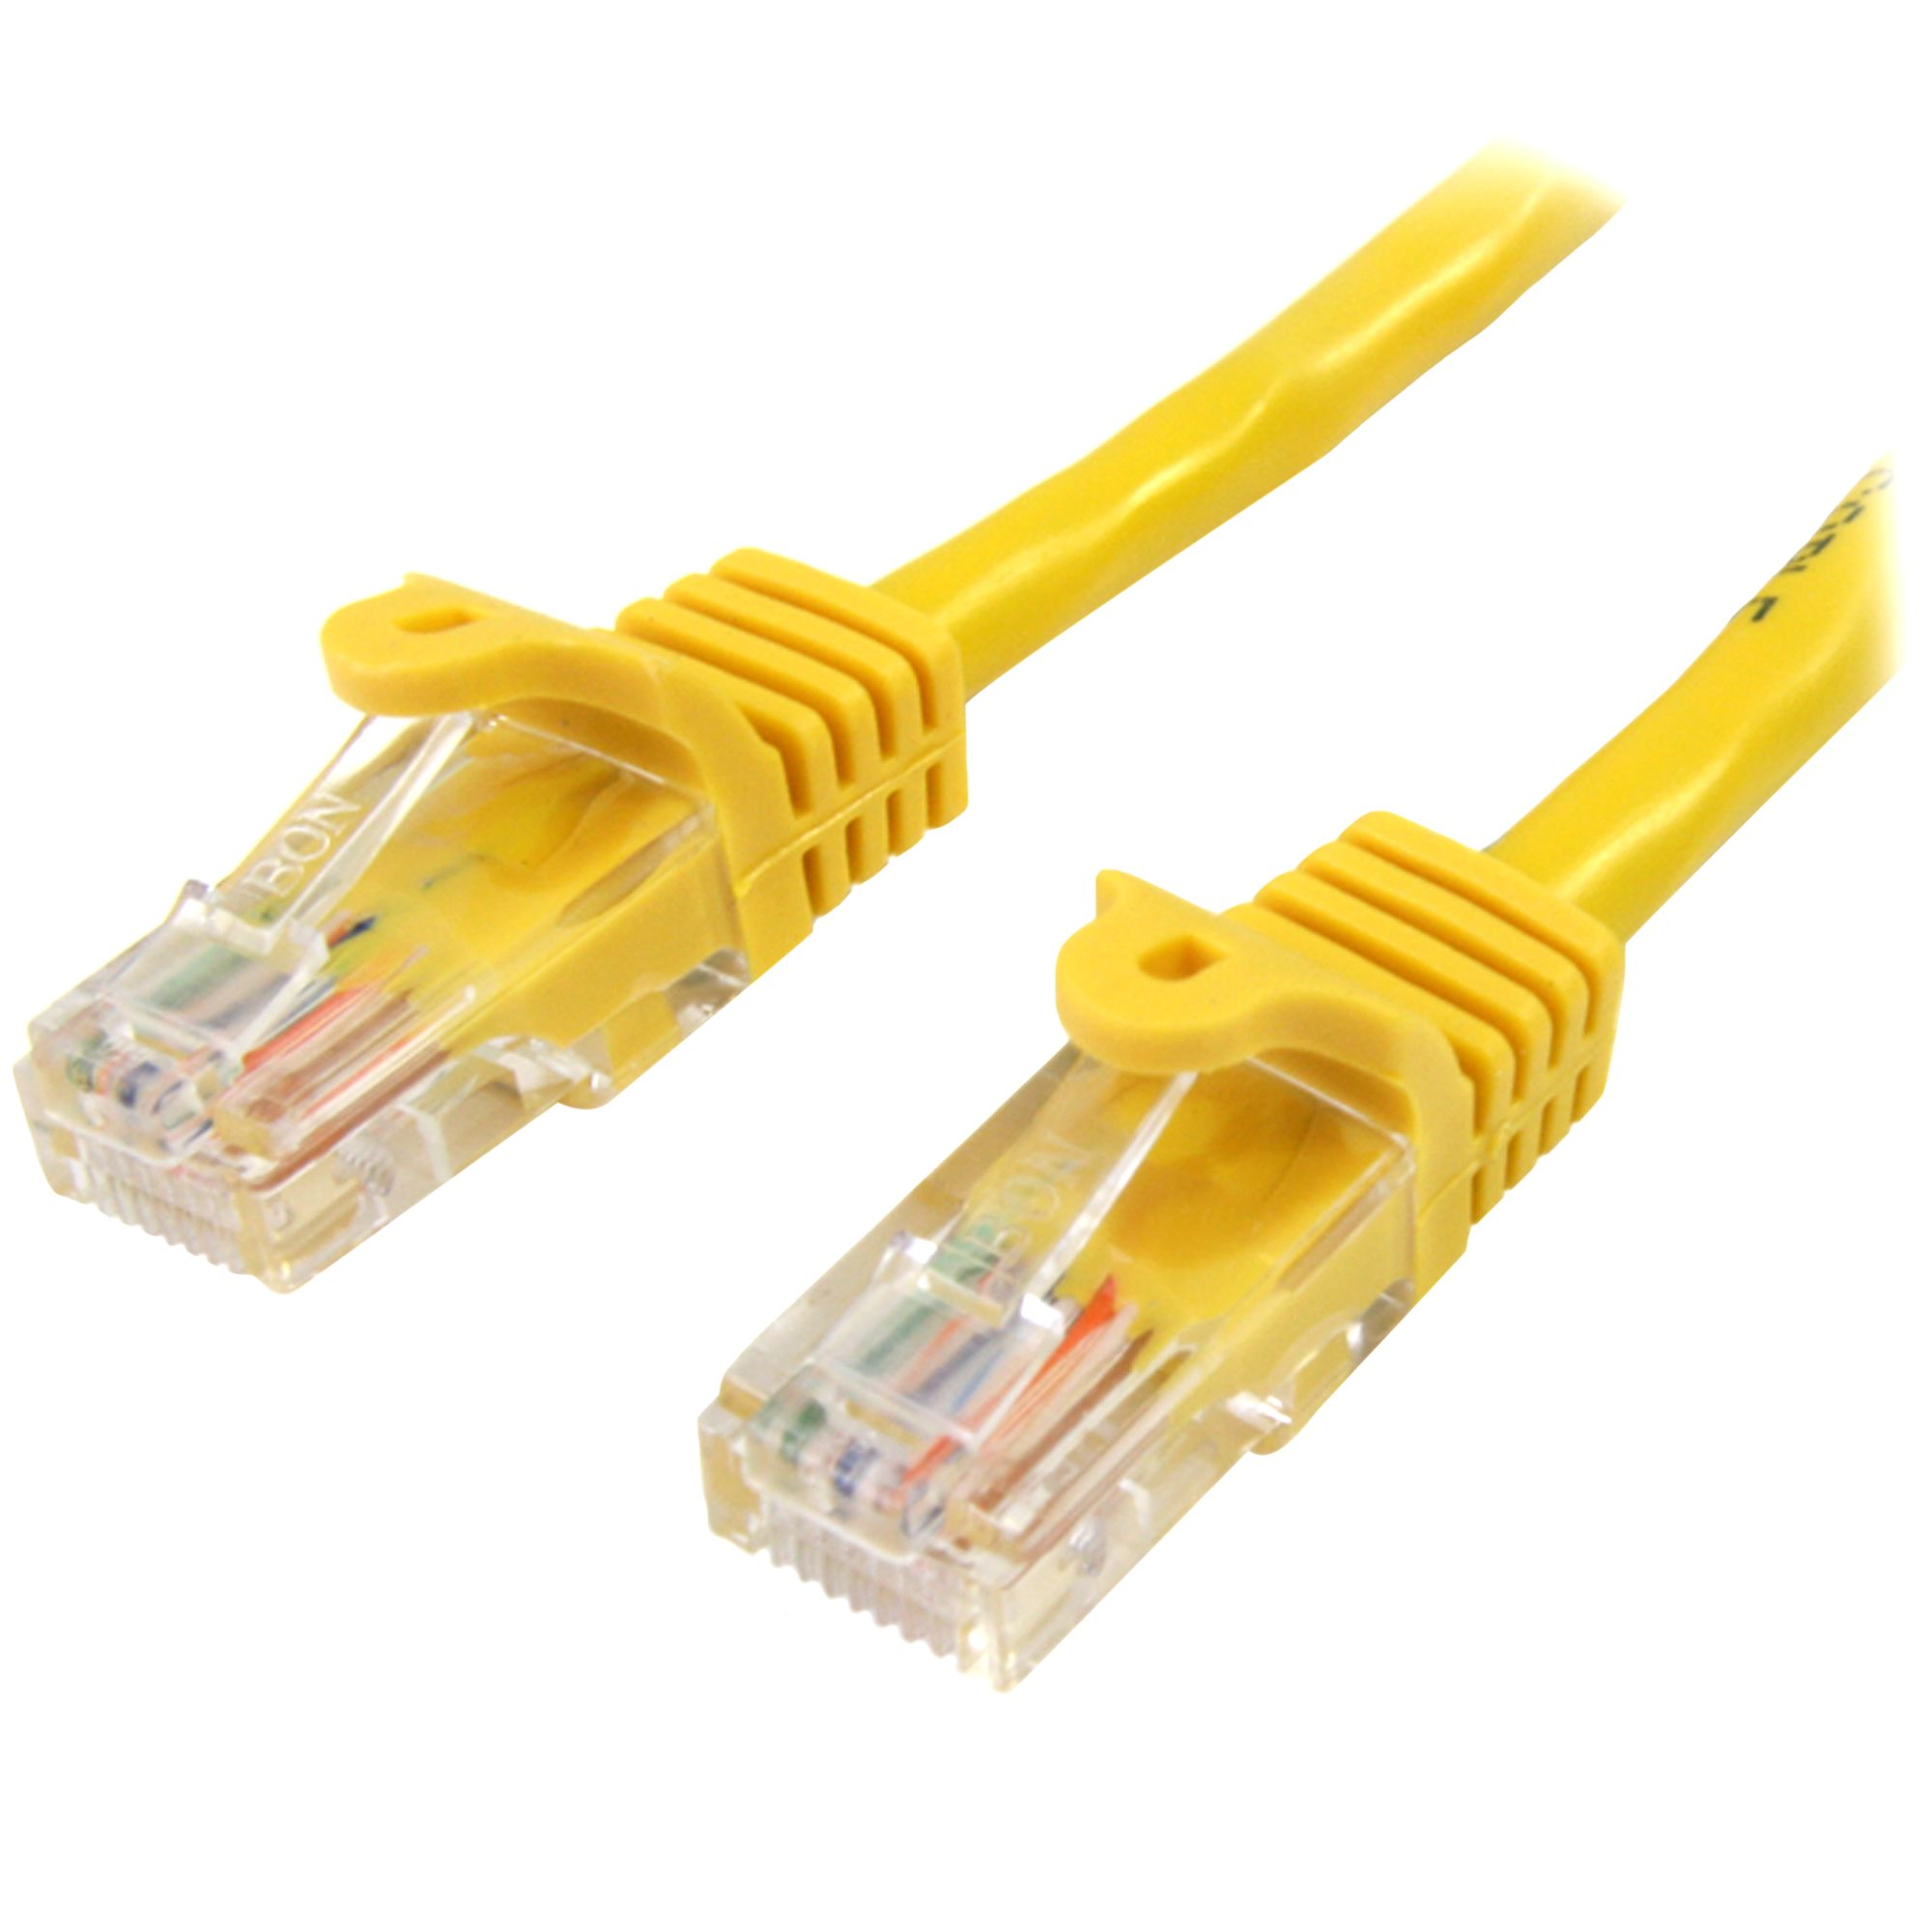 StarTech.com 0,5m Cat5e Ethernet Netzwerkkabel Snagless mit RJ45 - Cat 5e UTP Kabel - Gelb - Patch-Kabel - RJ-45 (M)